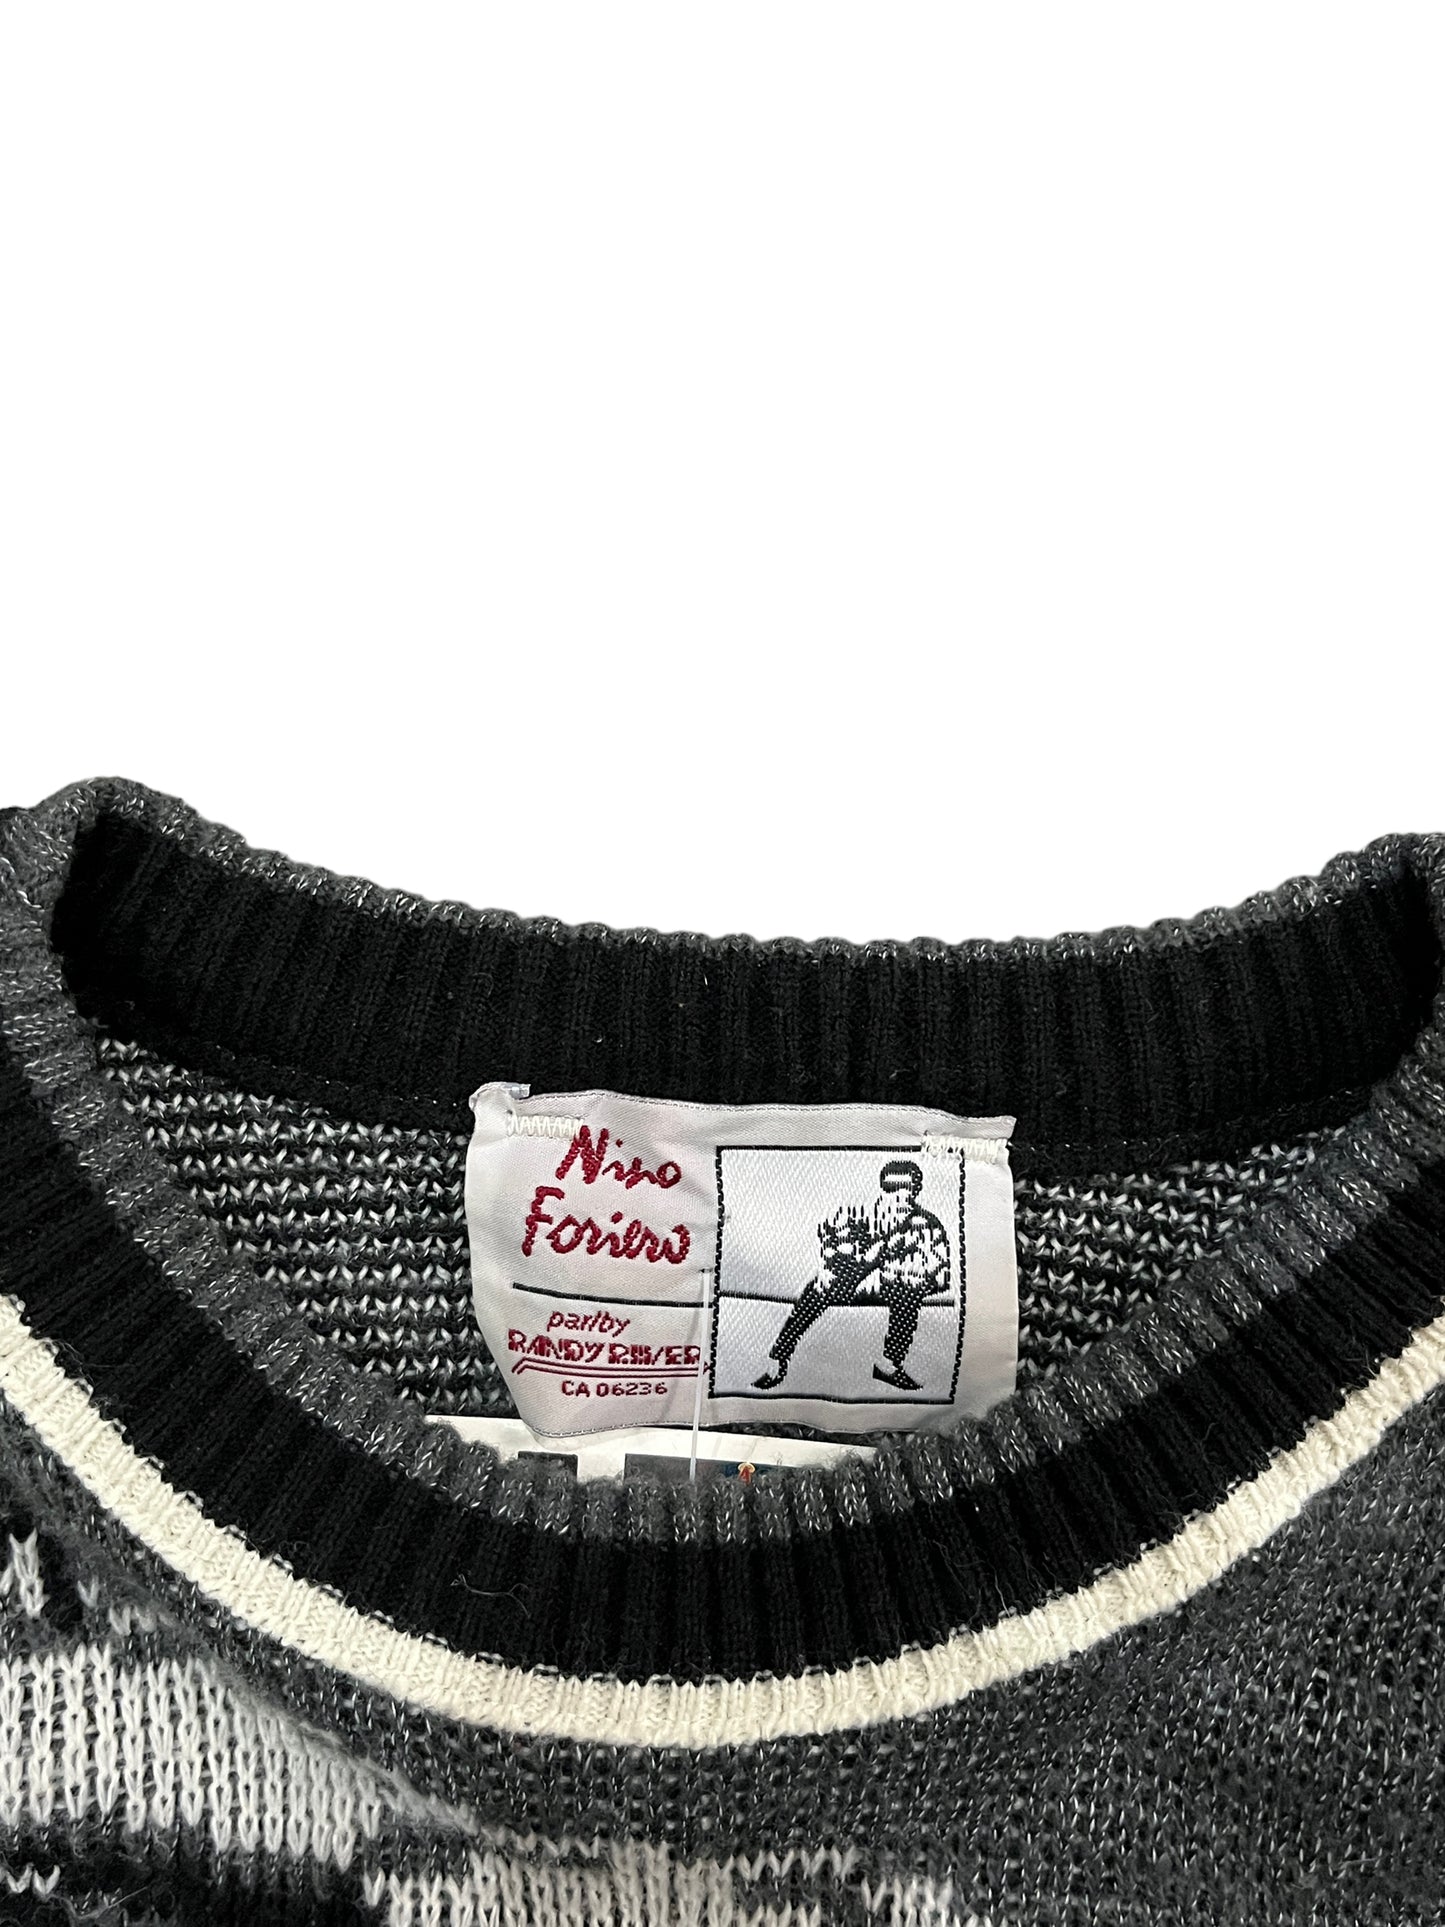 Vintage "Nino Foriero" Knit Sweater